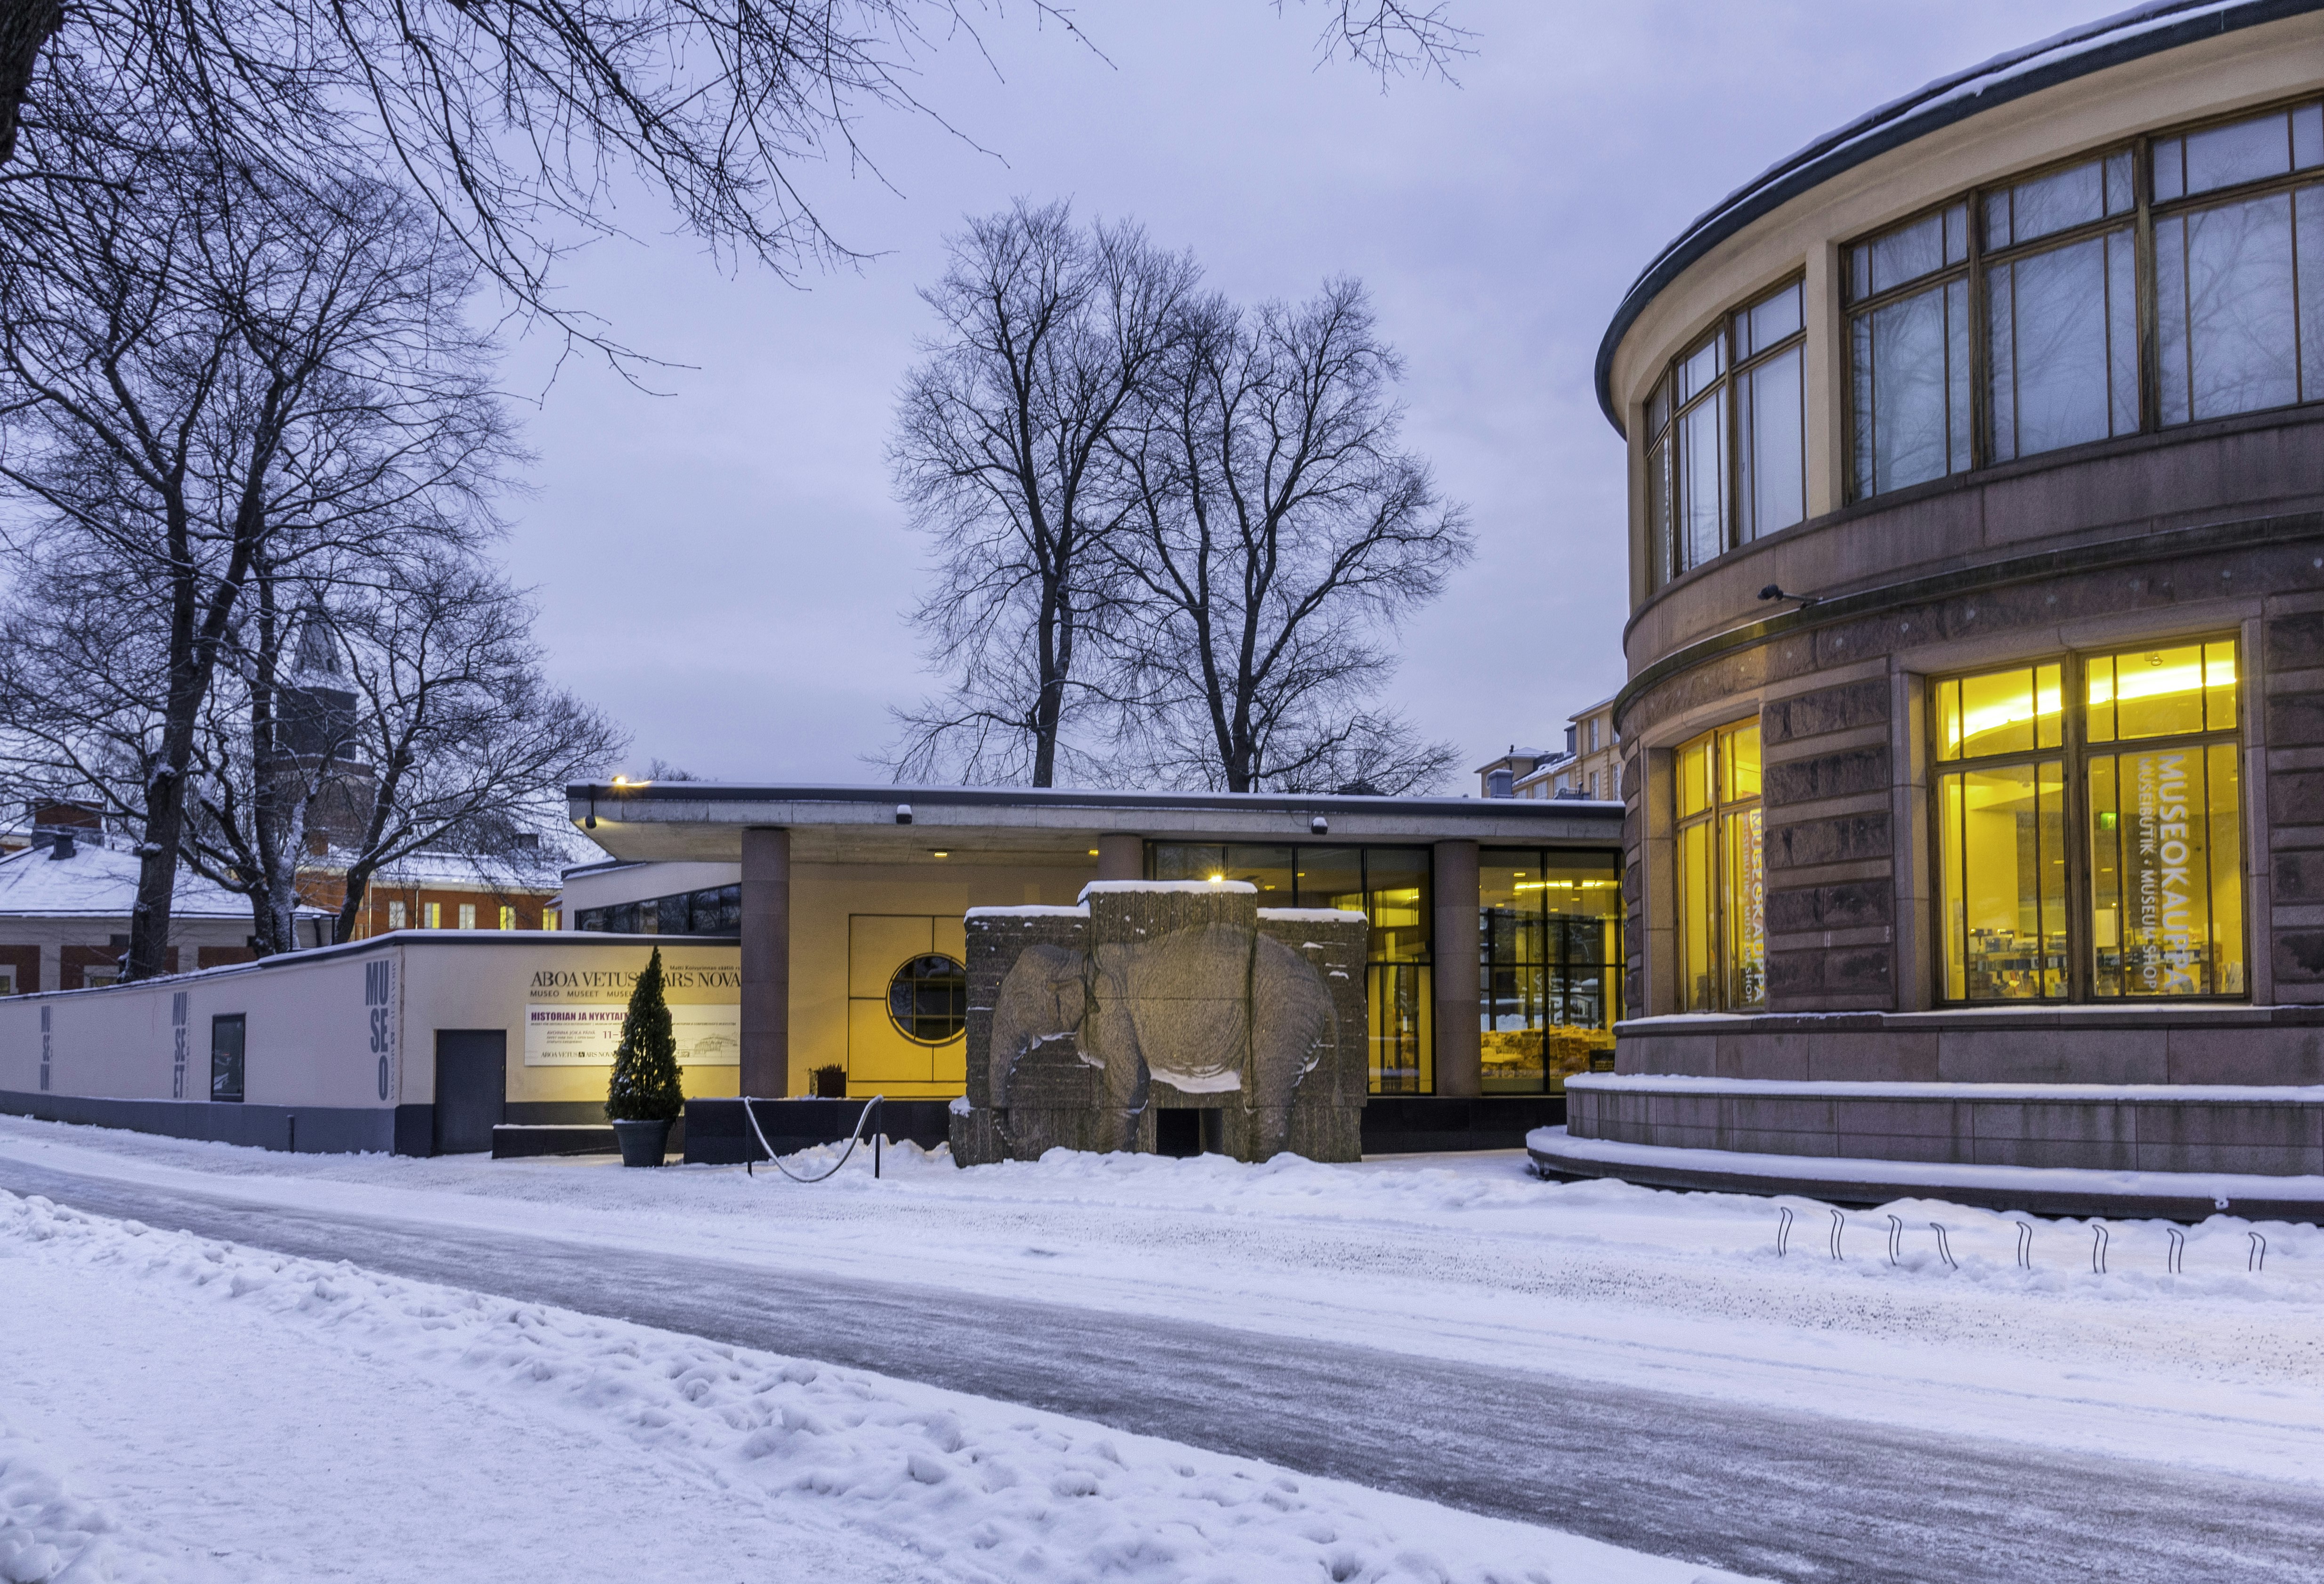 Aboa Vetus Ars Nova museum in winter time.